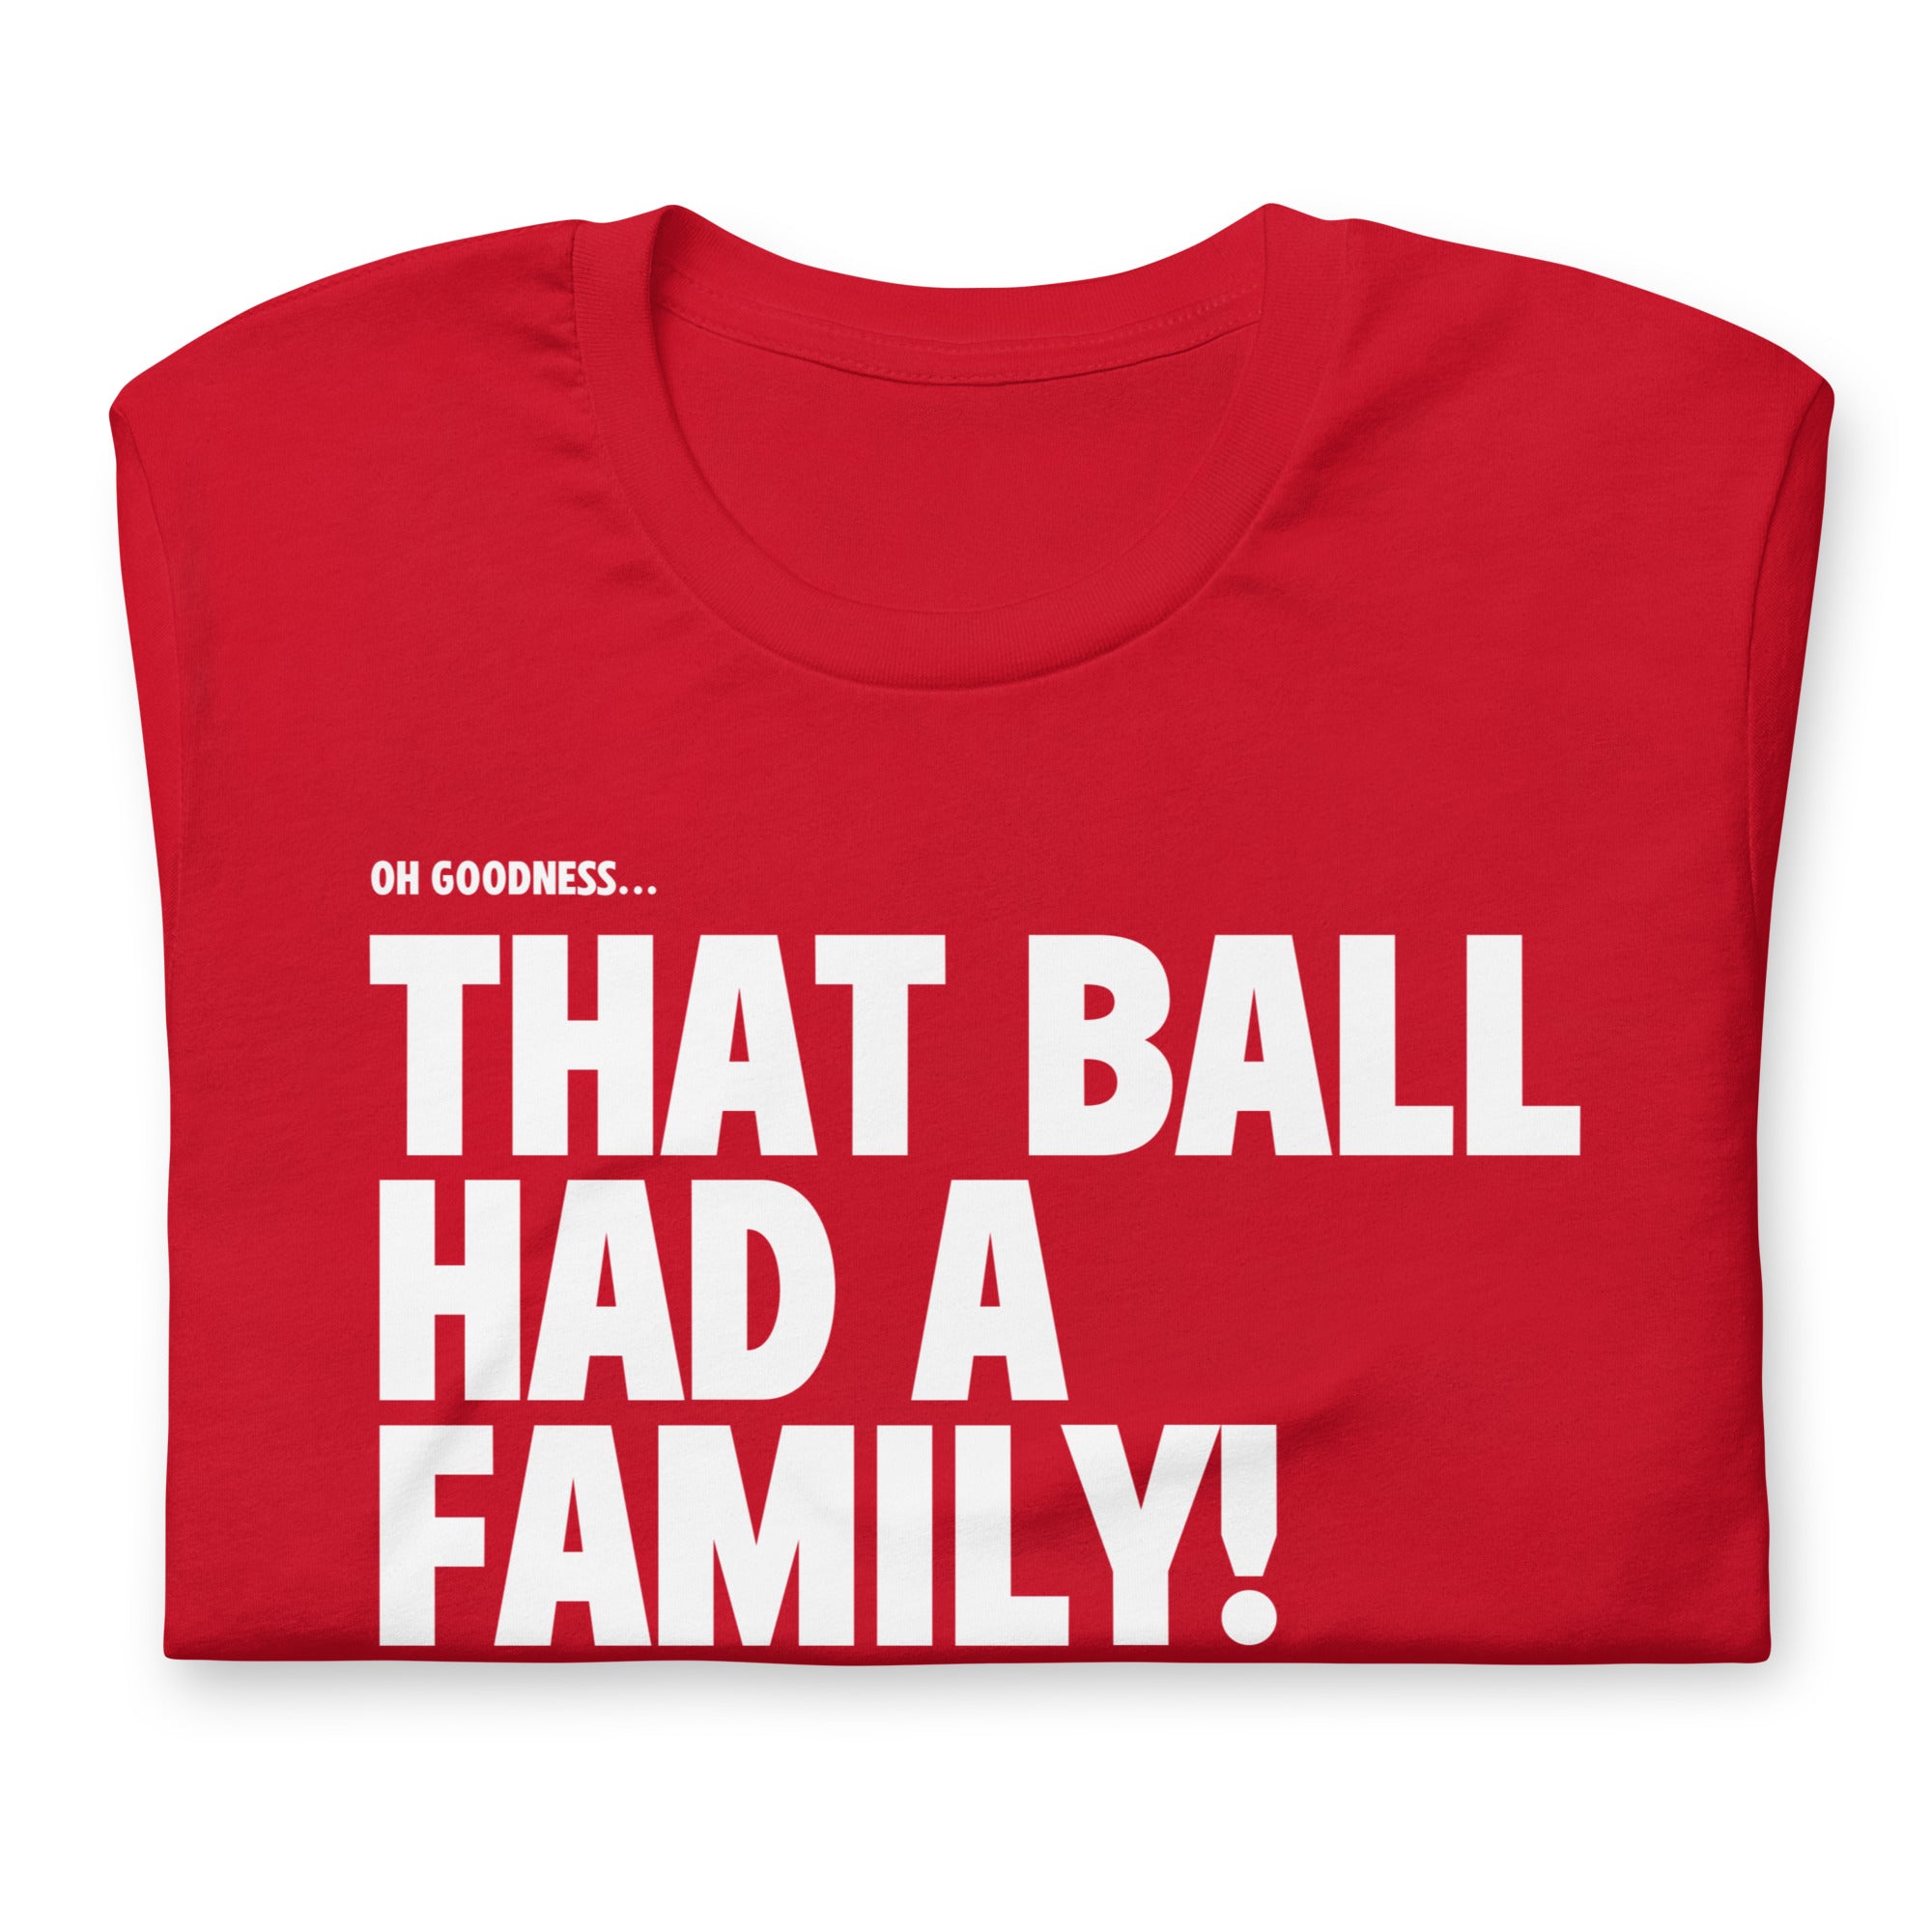 THAT BALL HAD A FAMILY! (Elly HR Call)